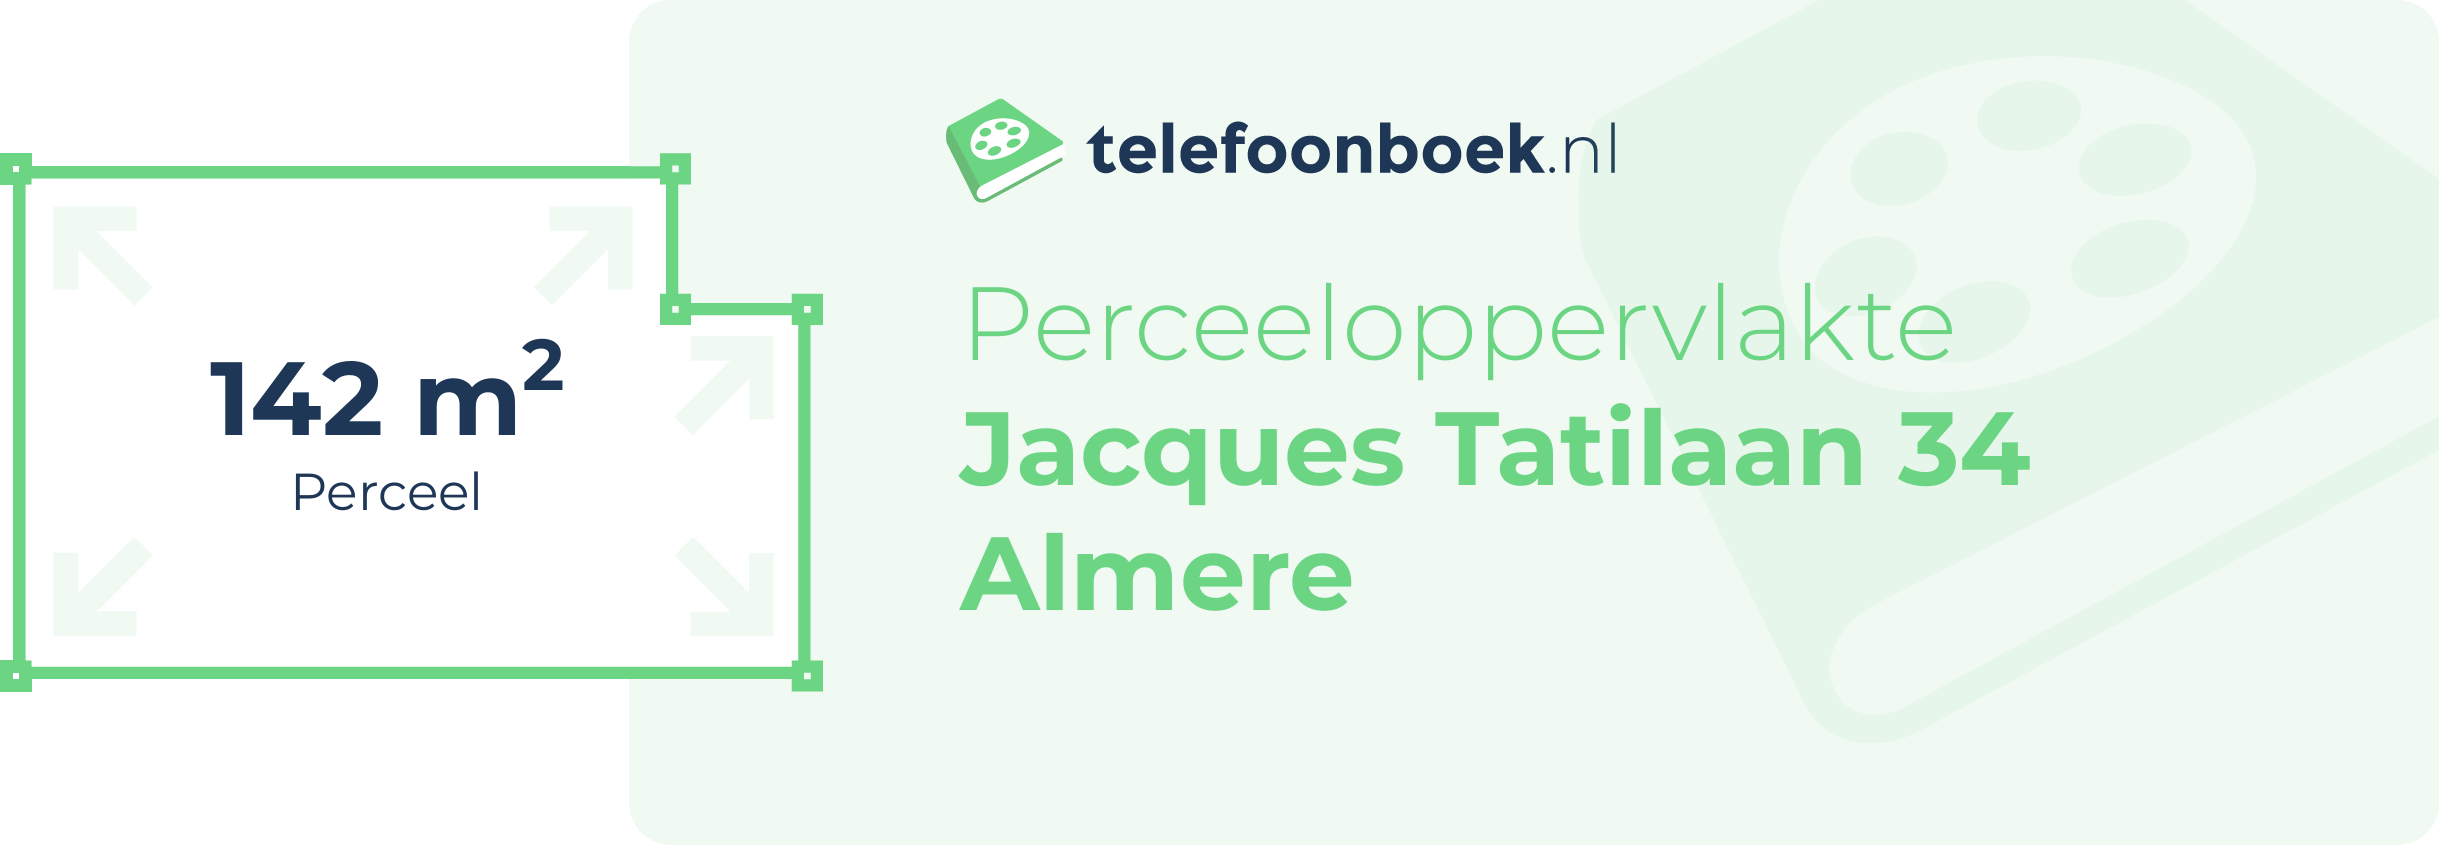 Perceeloppervlakte Jacques Tatilaan 34 Almere